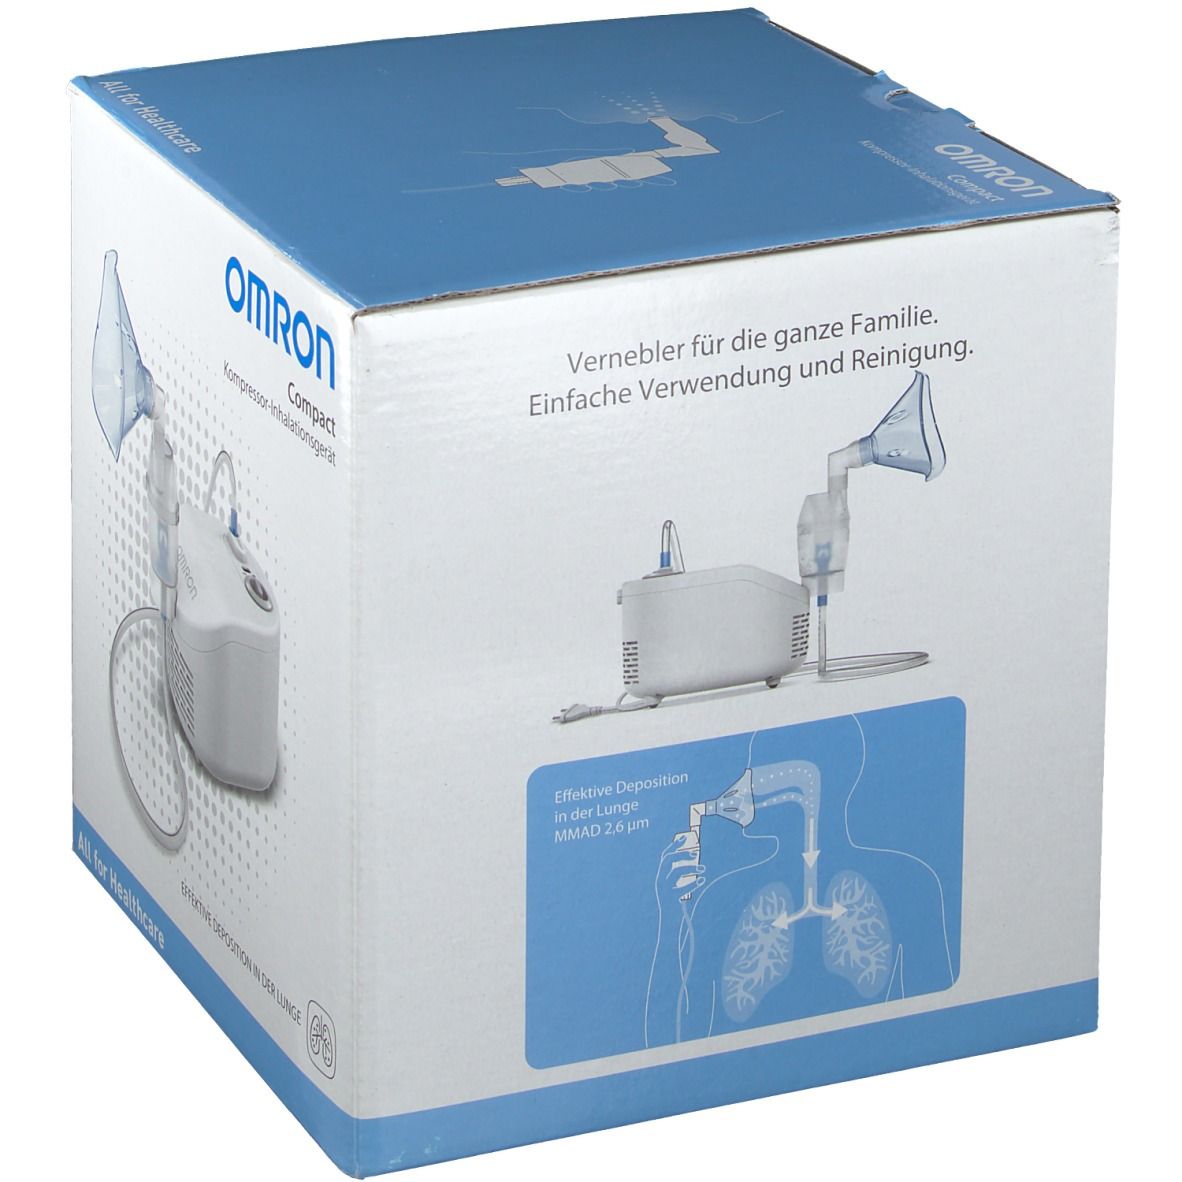 Omron Kompressor-Inhalationsgerät Compact NE-C101-D